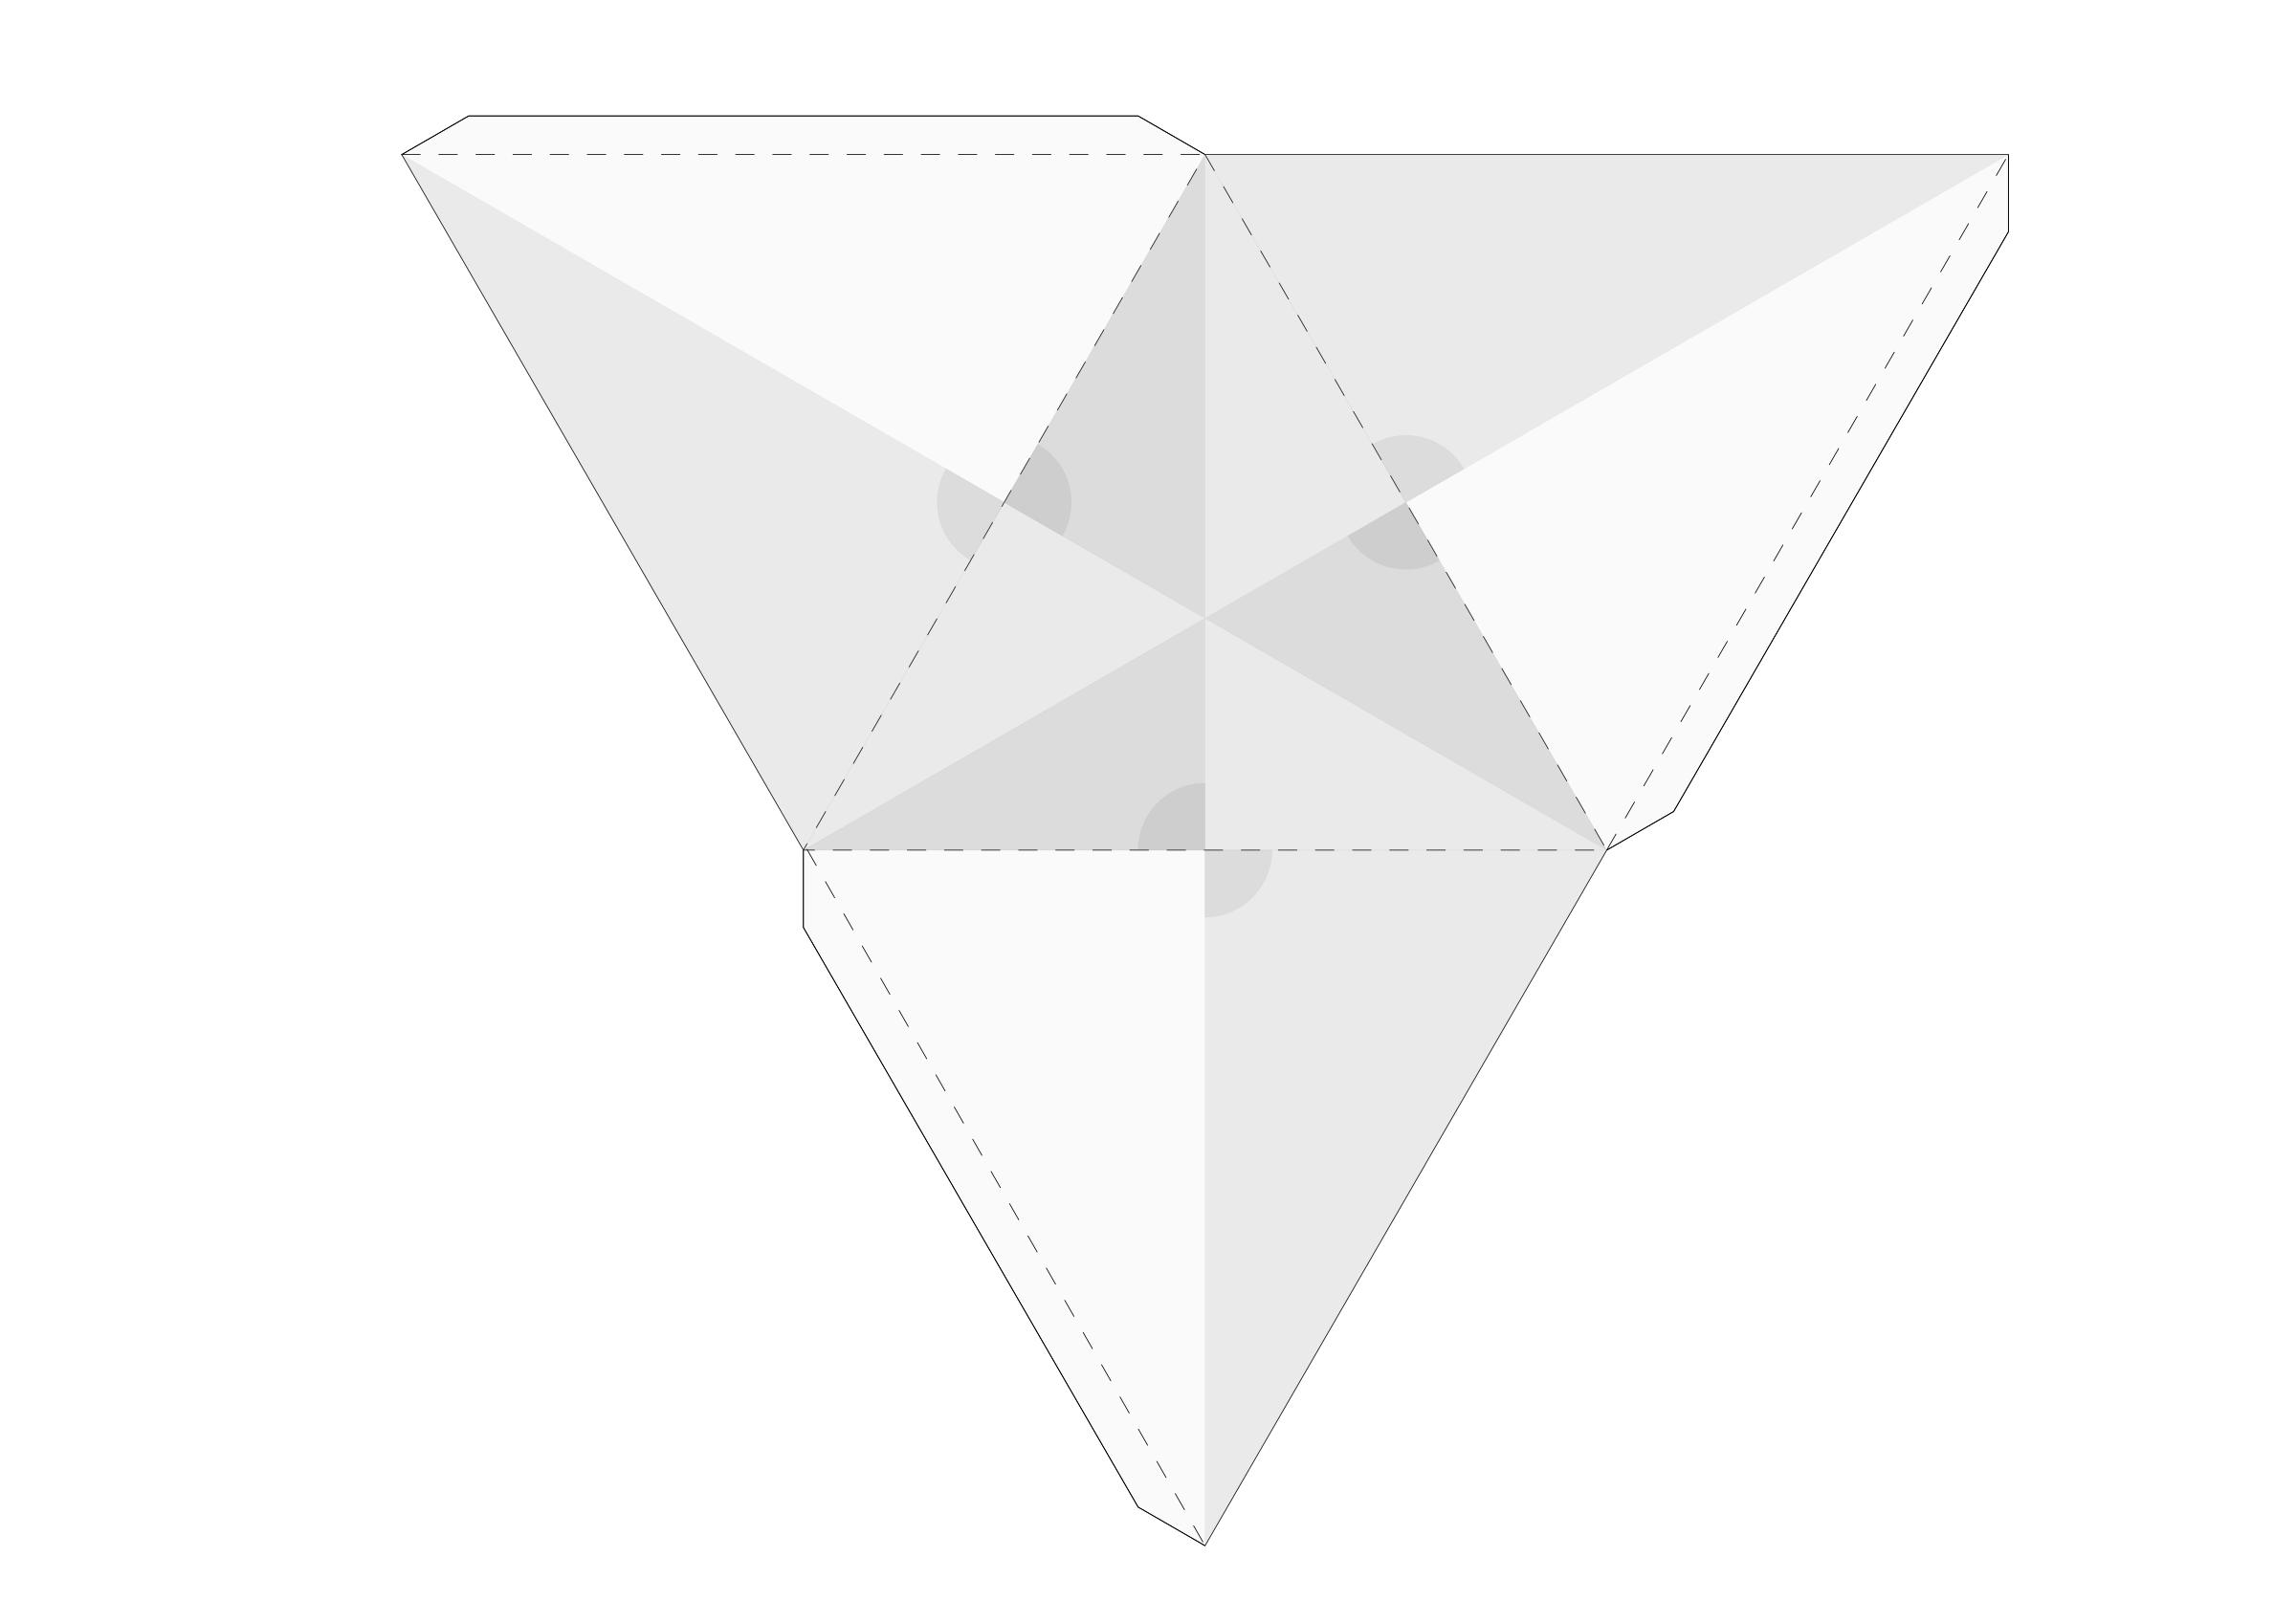 tetrahedron.net -- Tetraeder Netz PNG icons